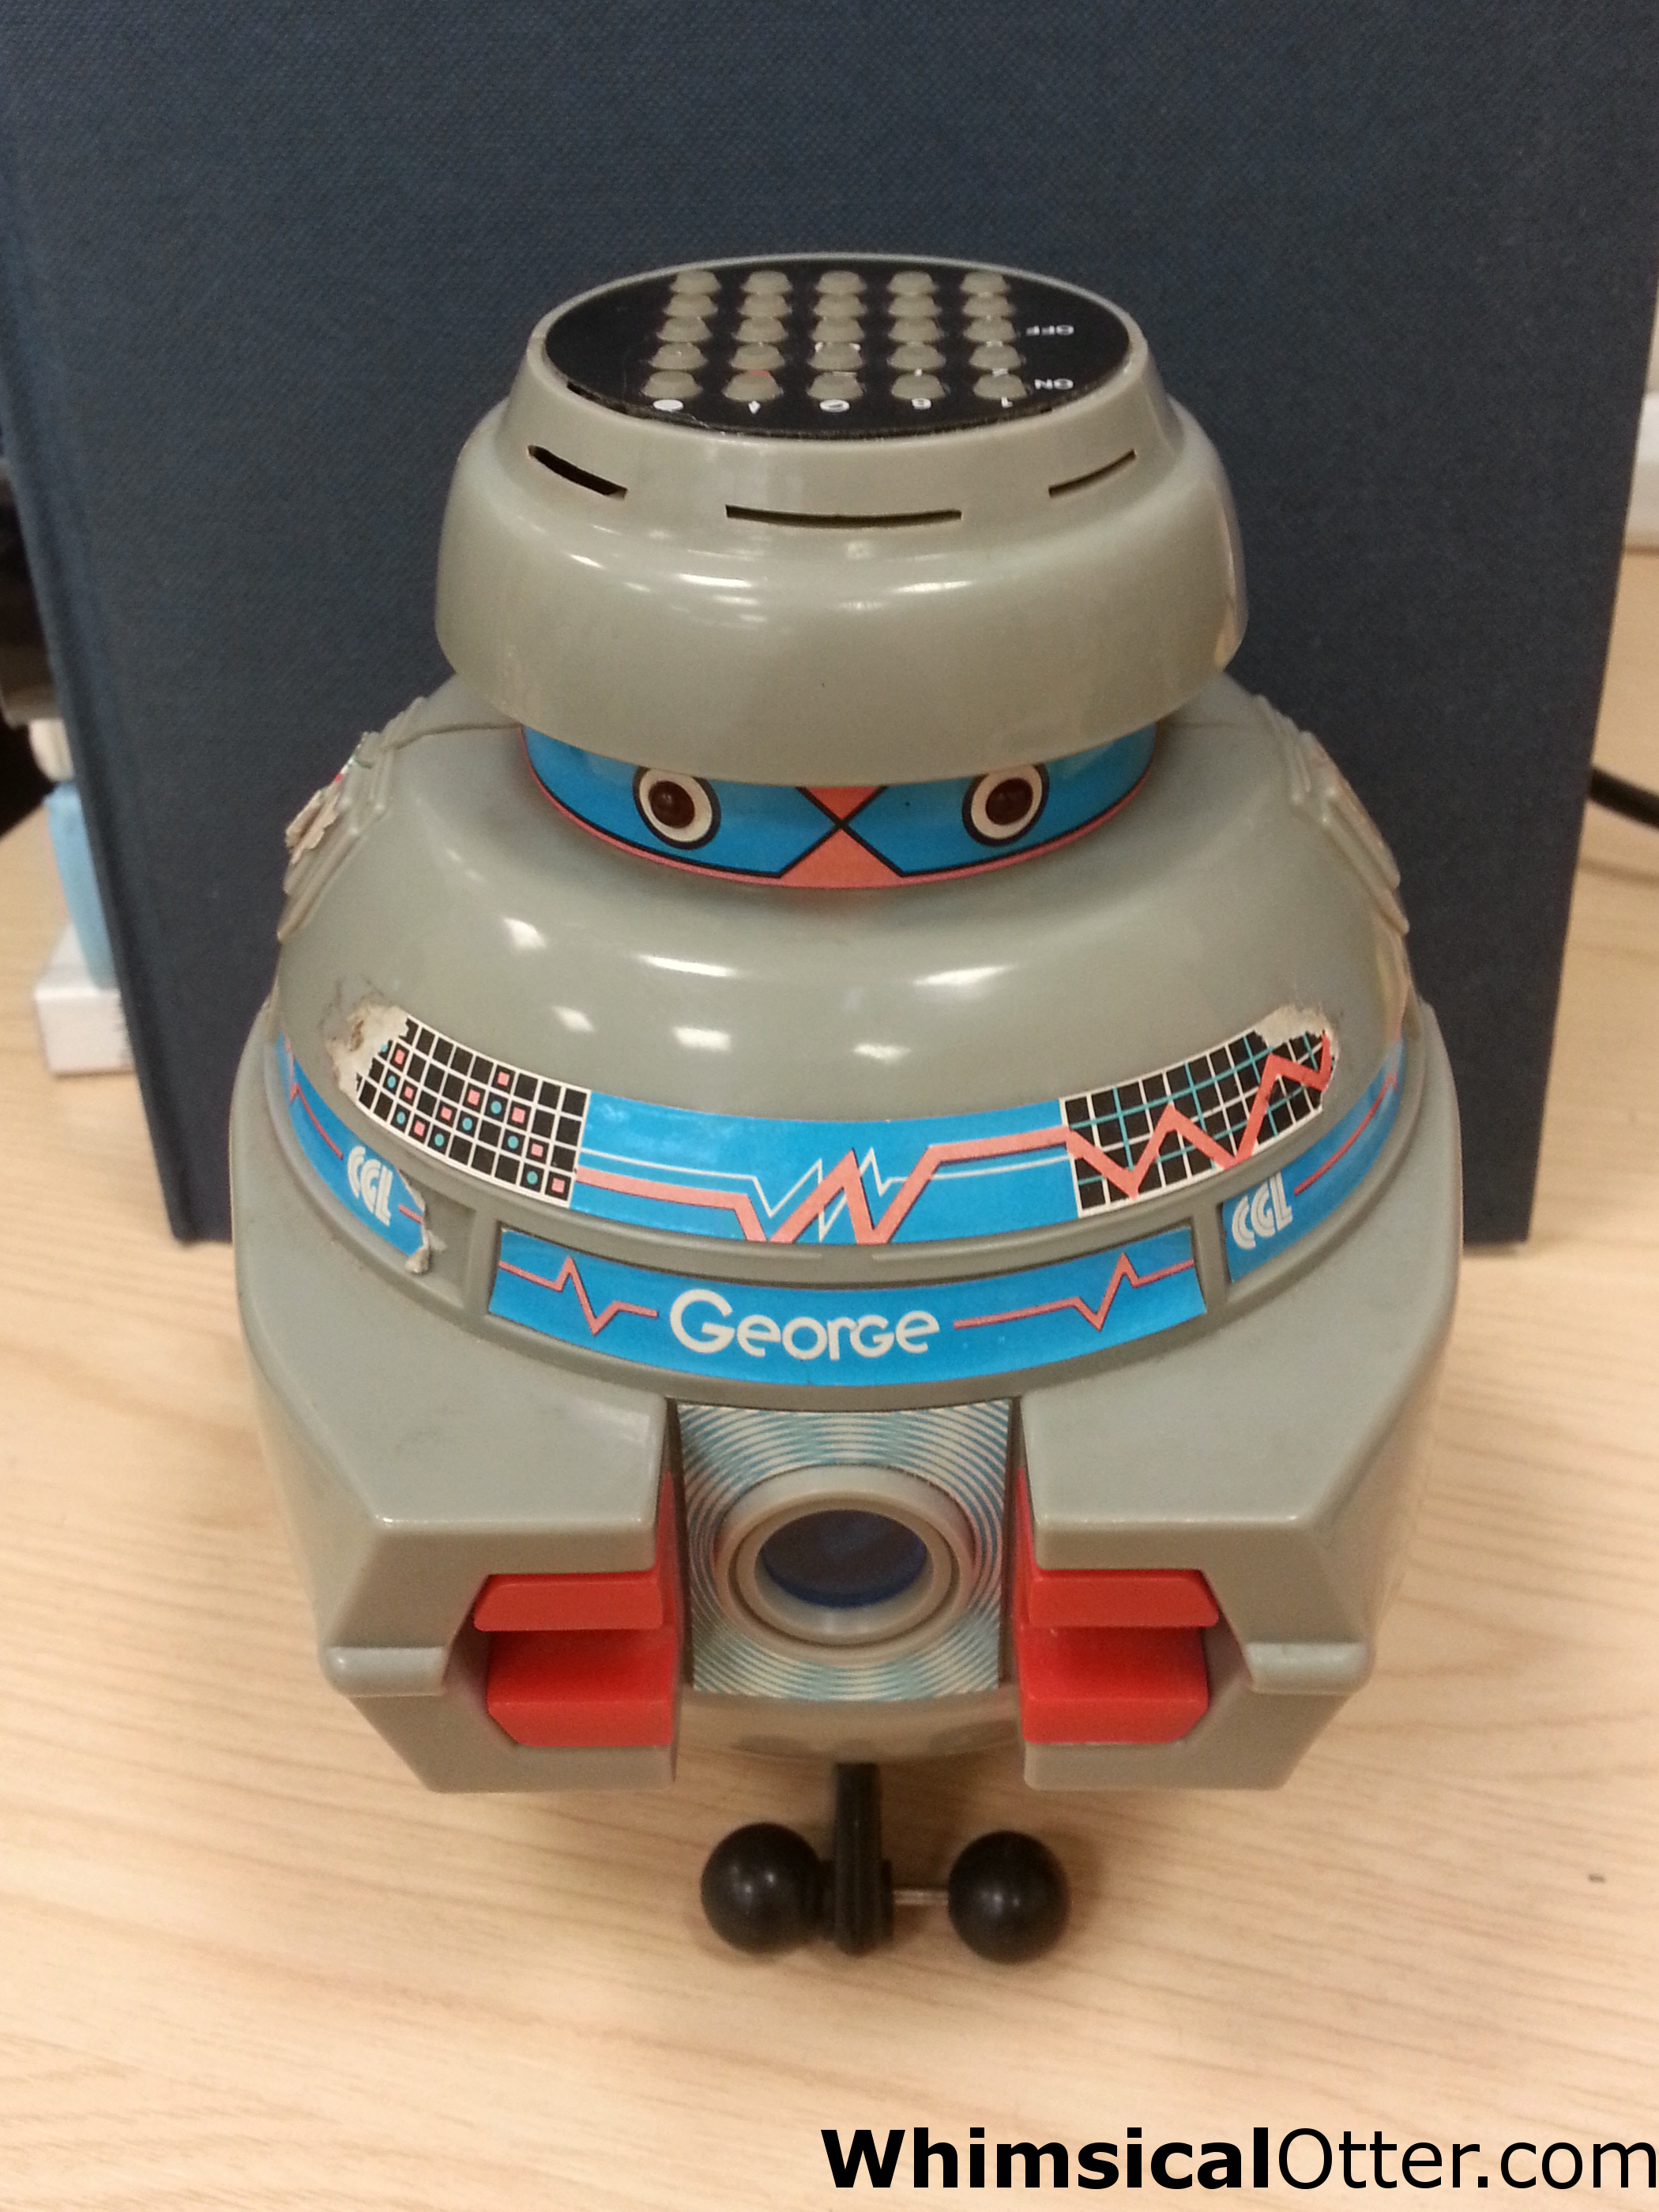 George CompuRobot CGL 02